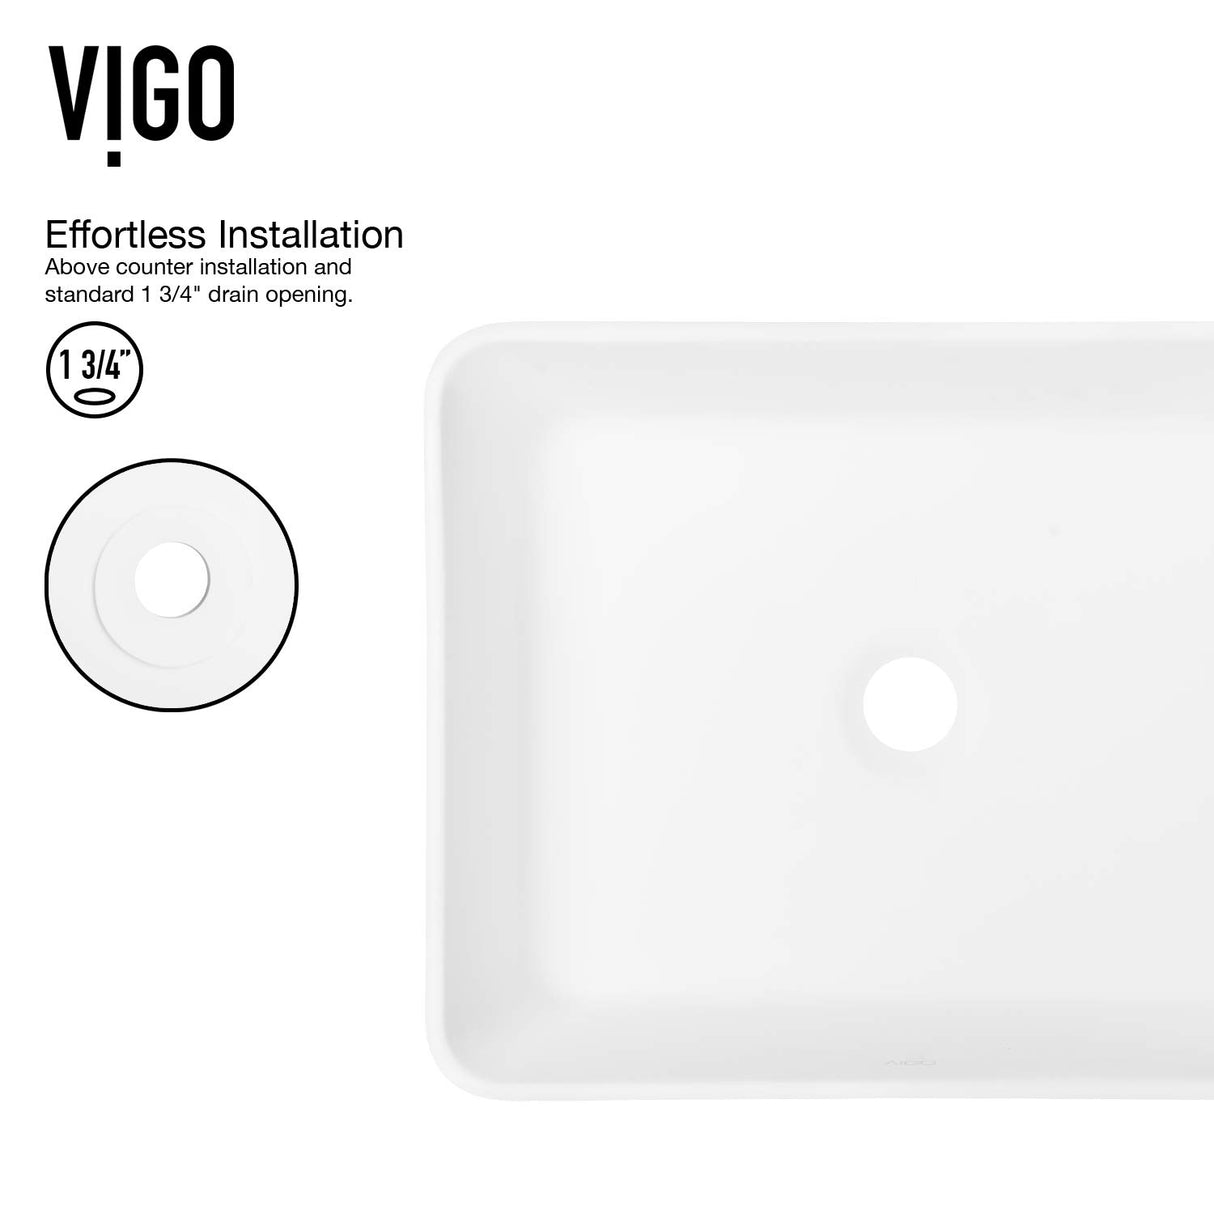 VIGO VGT981 14.38" L -17.75" W -5.13" H Matte Stone Marigold Composite Rectangular Vessel Bathroom Sink in White with Faucet and Pop-Up Drain in Matte Black